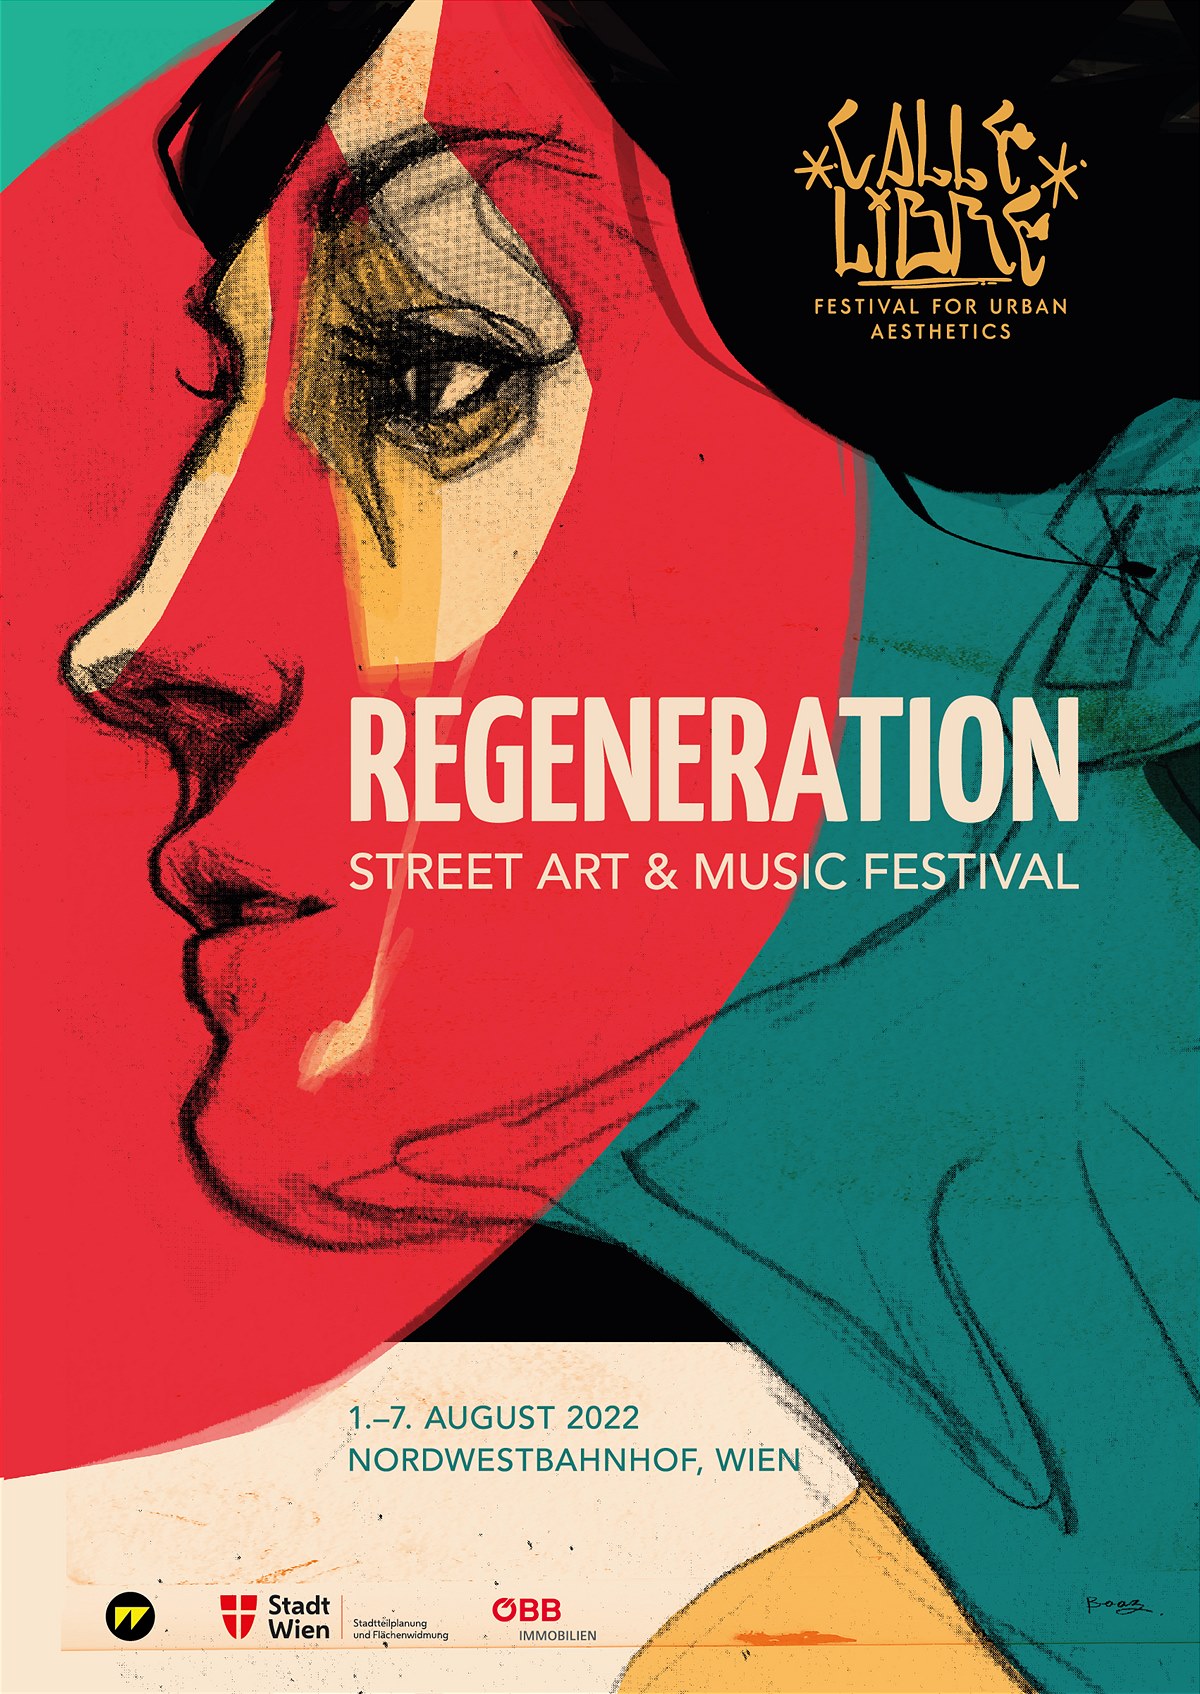 Calle Libre Festival 2022 – Regeneration